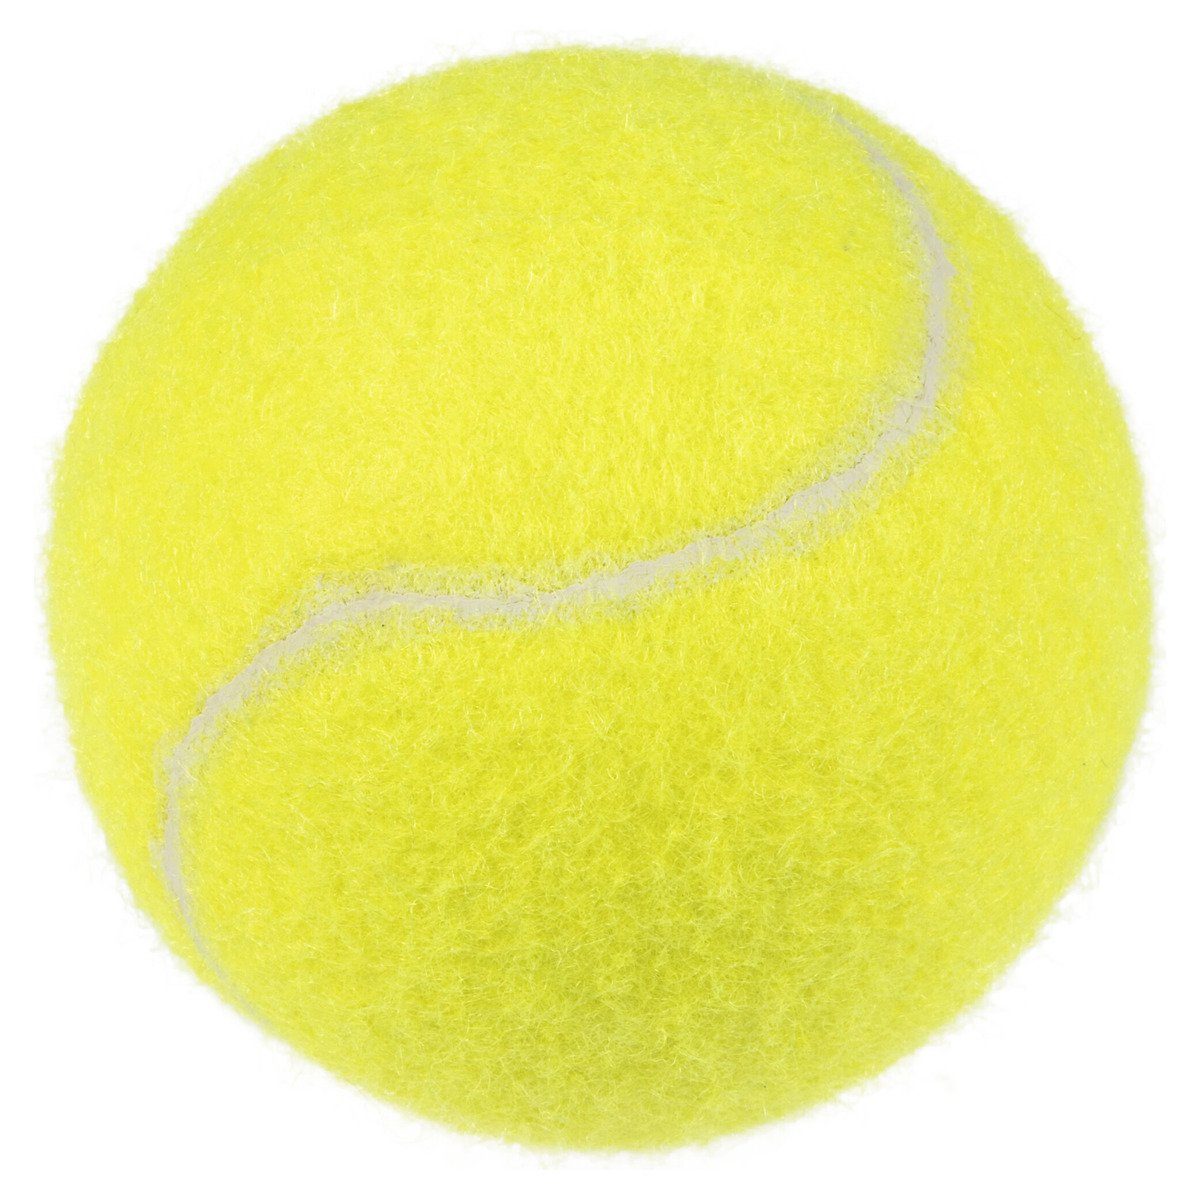 Spielball Flamingo gelb Hundespielzeug Smash Tennisball